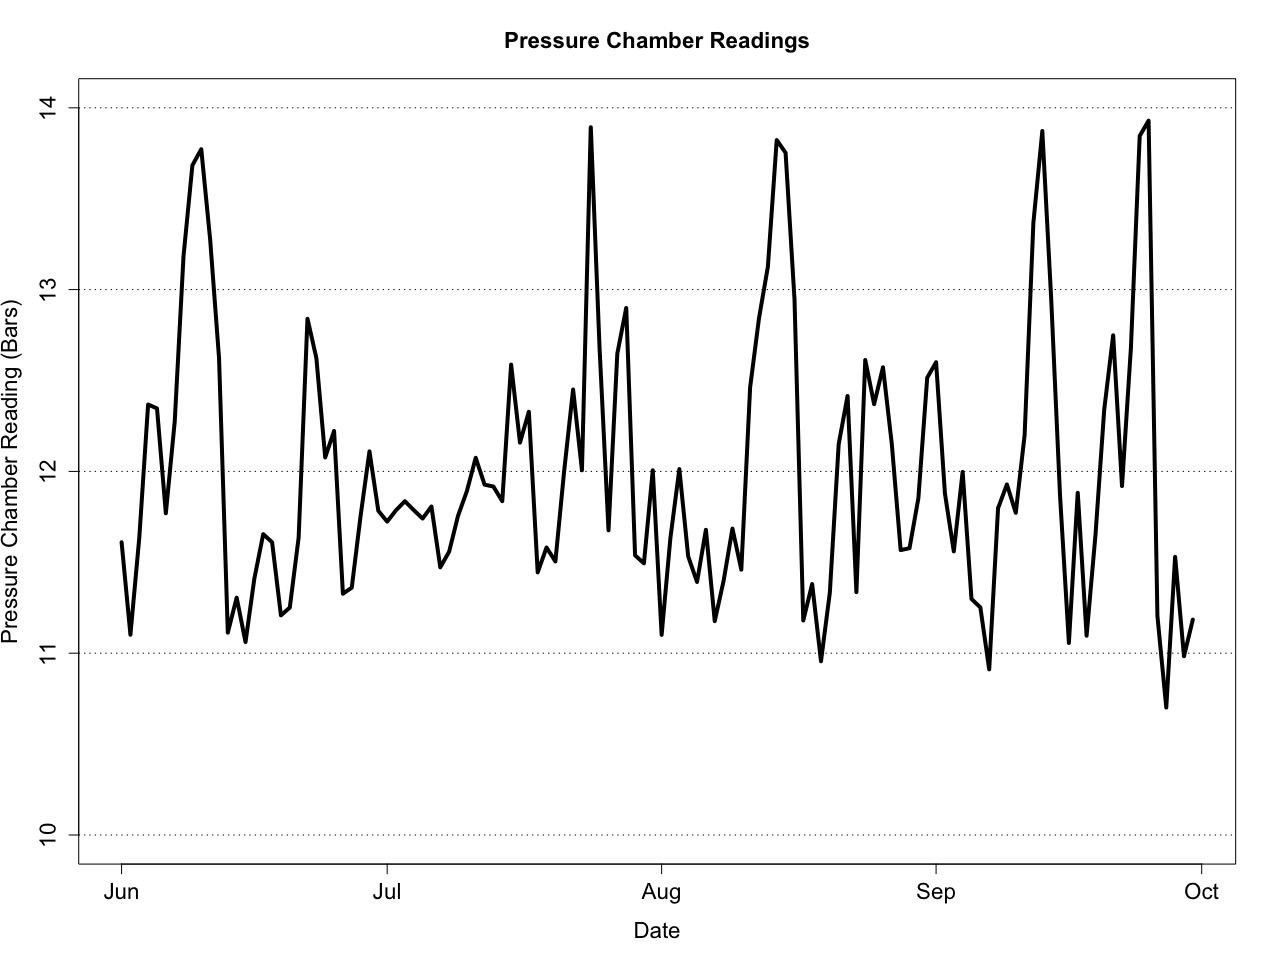 Figure 4: Pressure Chamber Readings